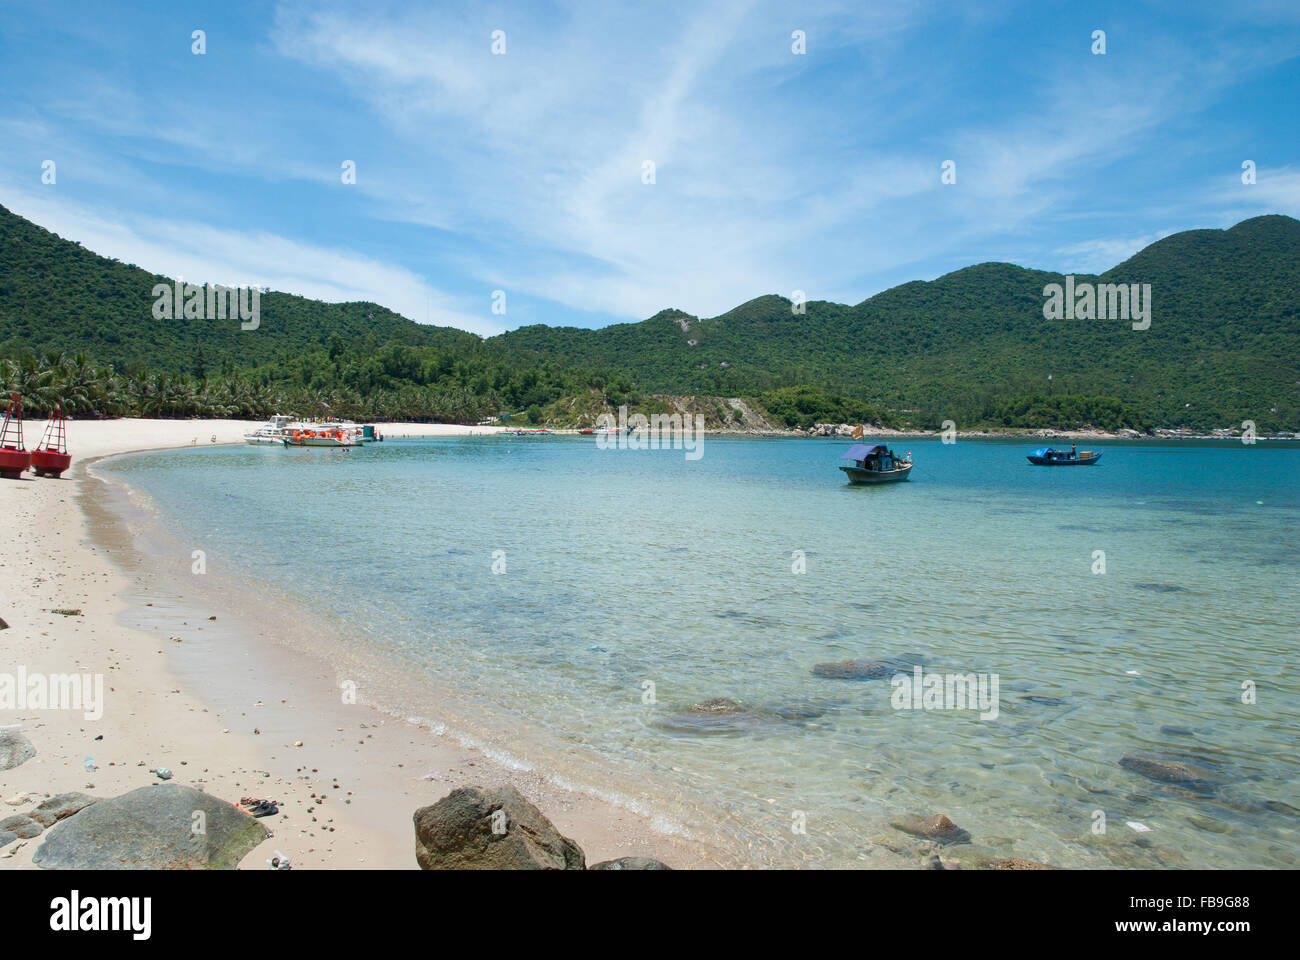 Sunny and warm tropical beach. Bay of Cham Islands near Hoi An( Hoian) and Da Nang( Danang), Central Vietnam. Stock Photo